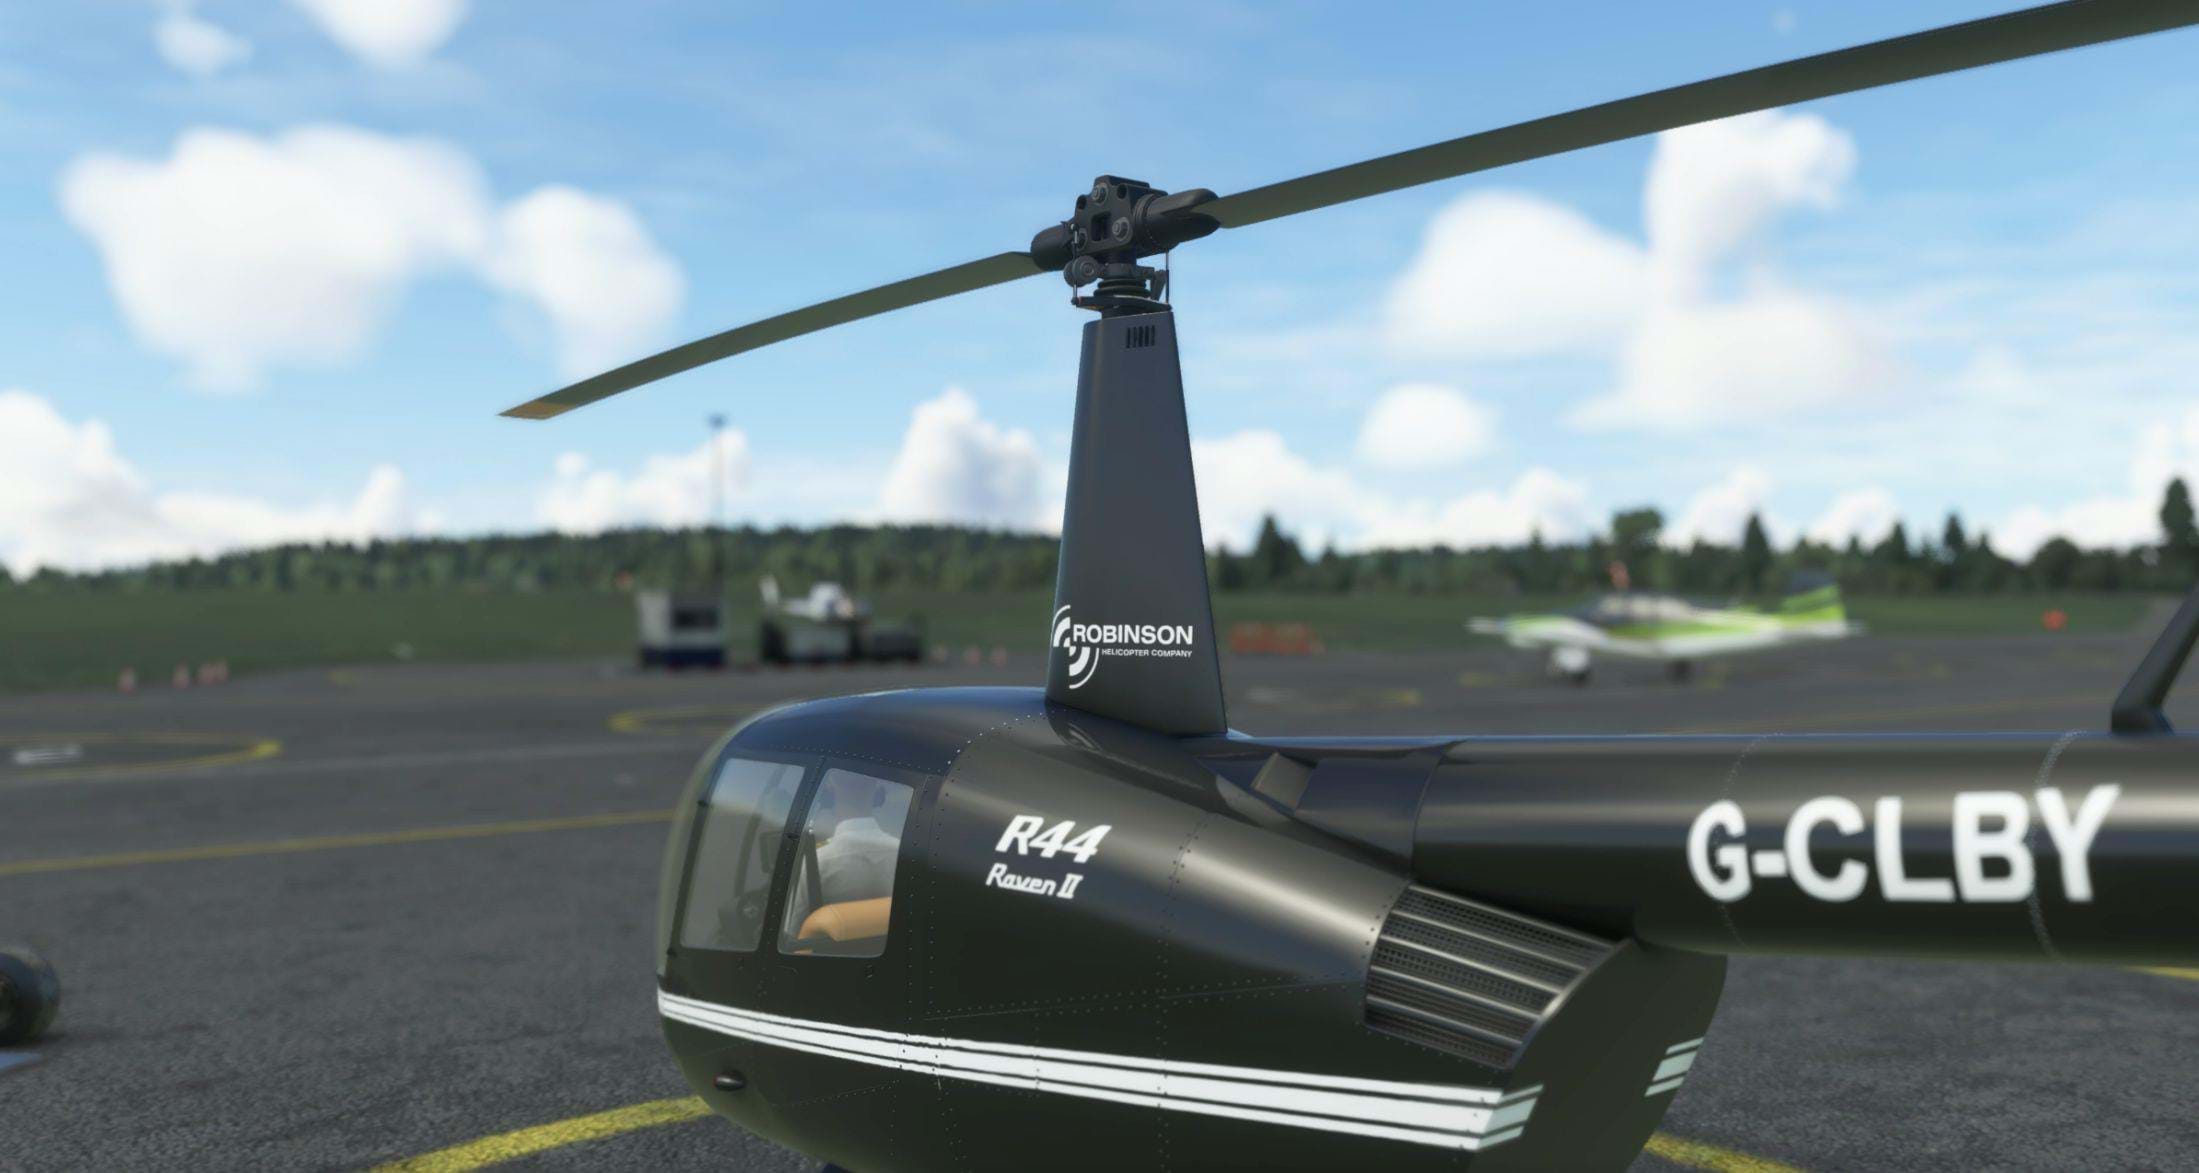 RotorSim Pilot R44 for MSFS